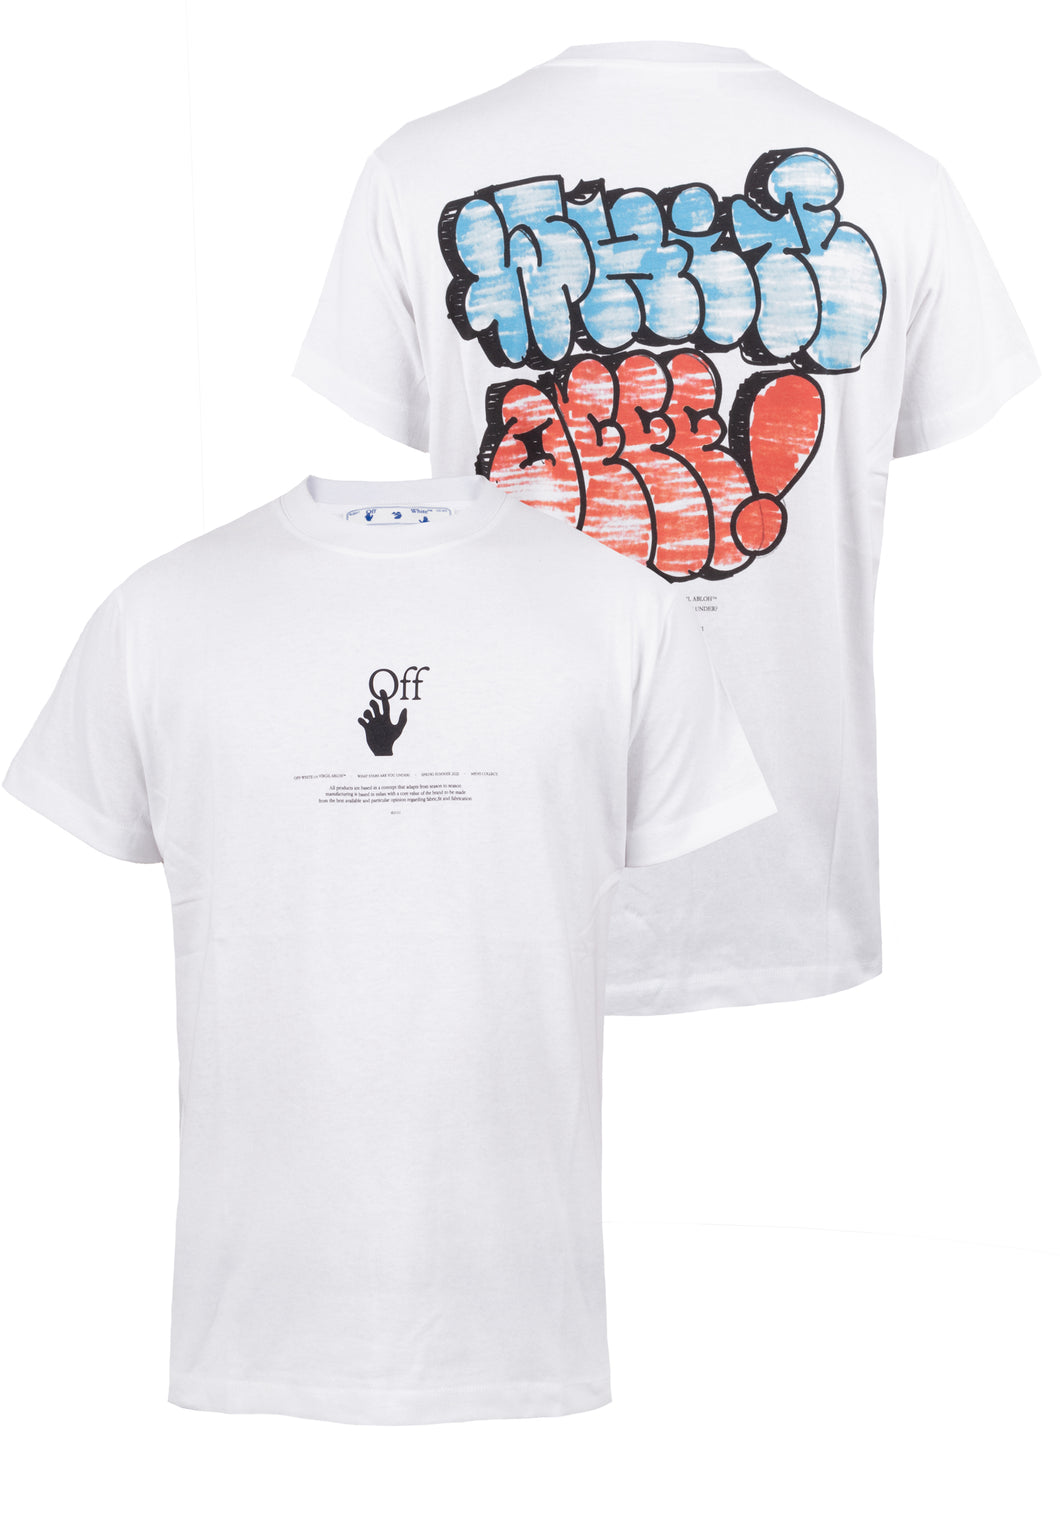 Off White Herren T-Shirt | GRAFF S/S OVER WHITE HIGH RISE